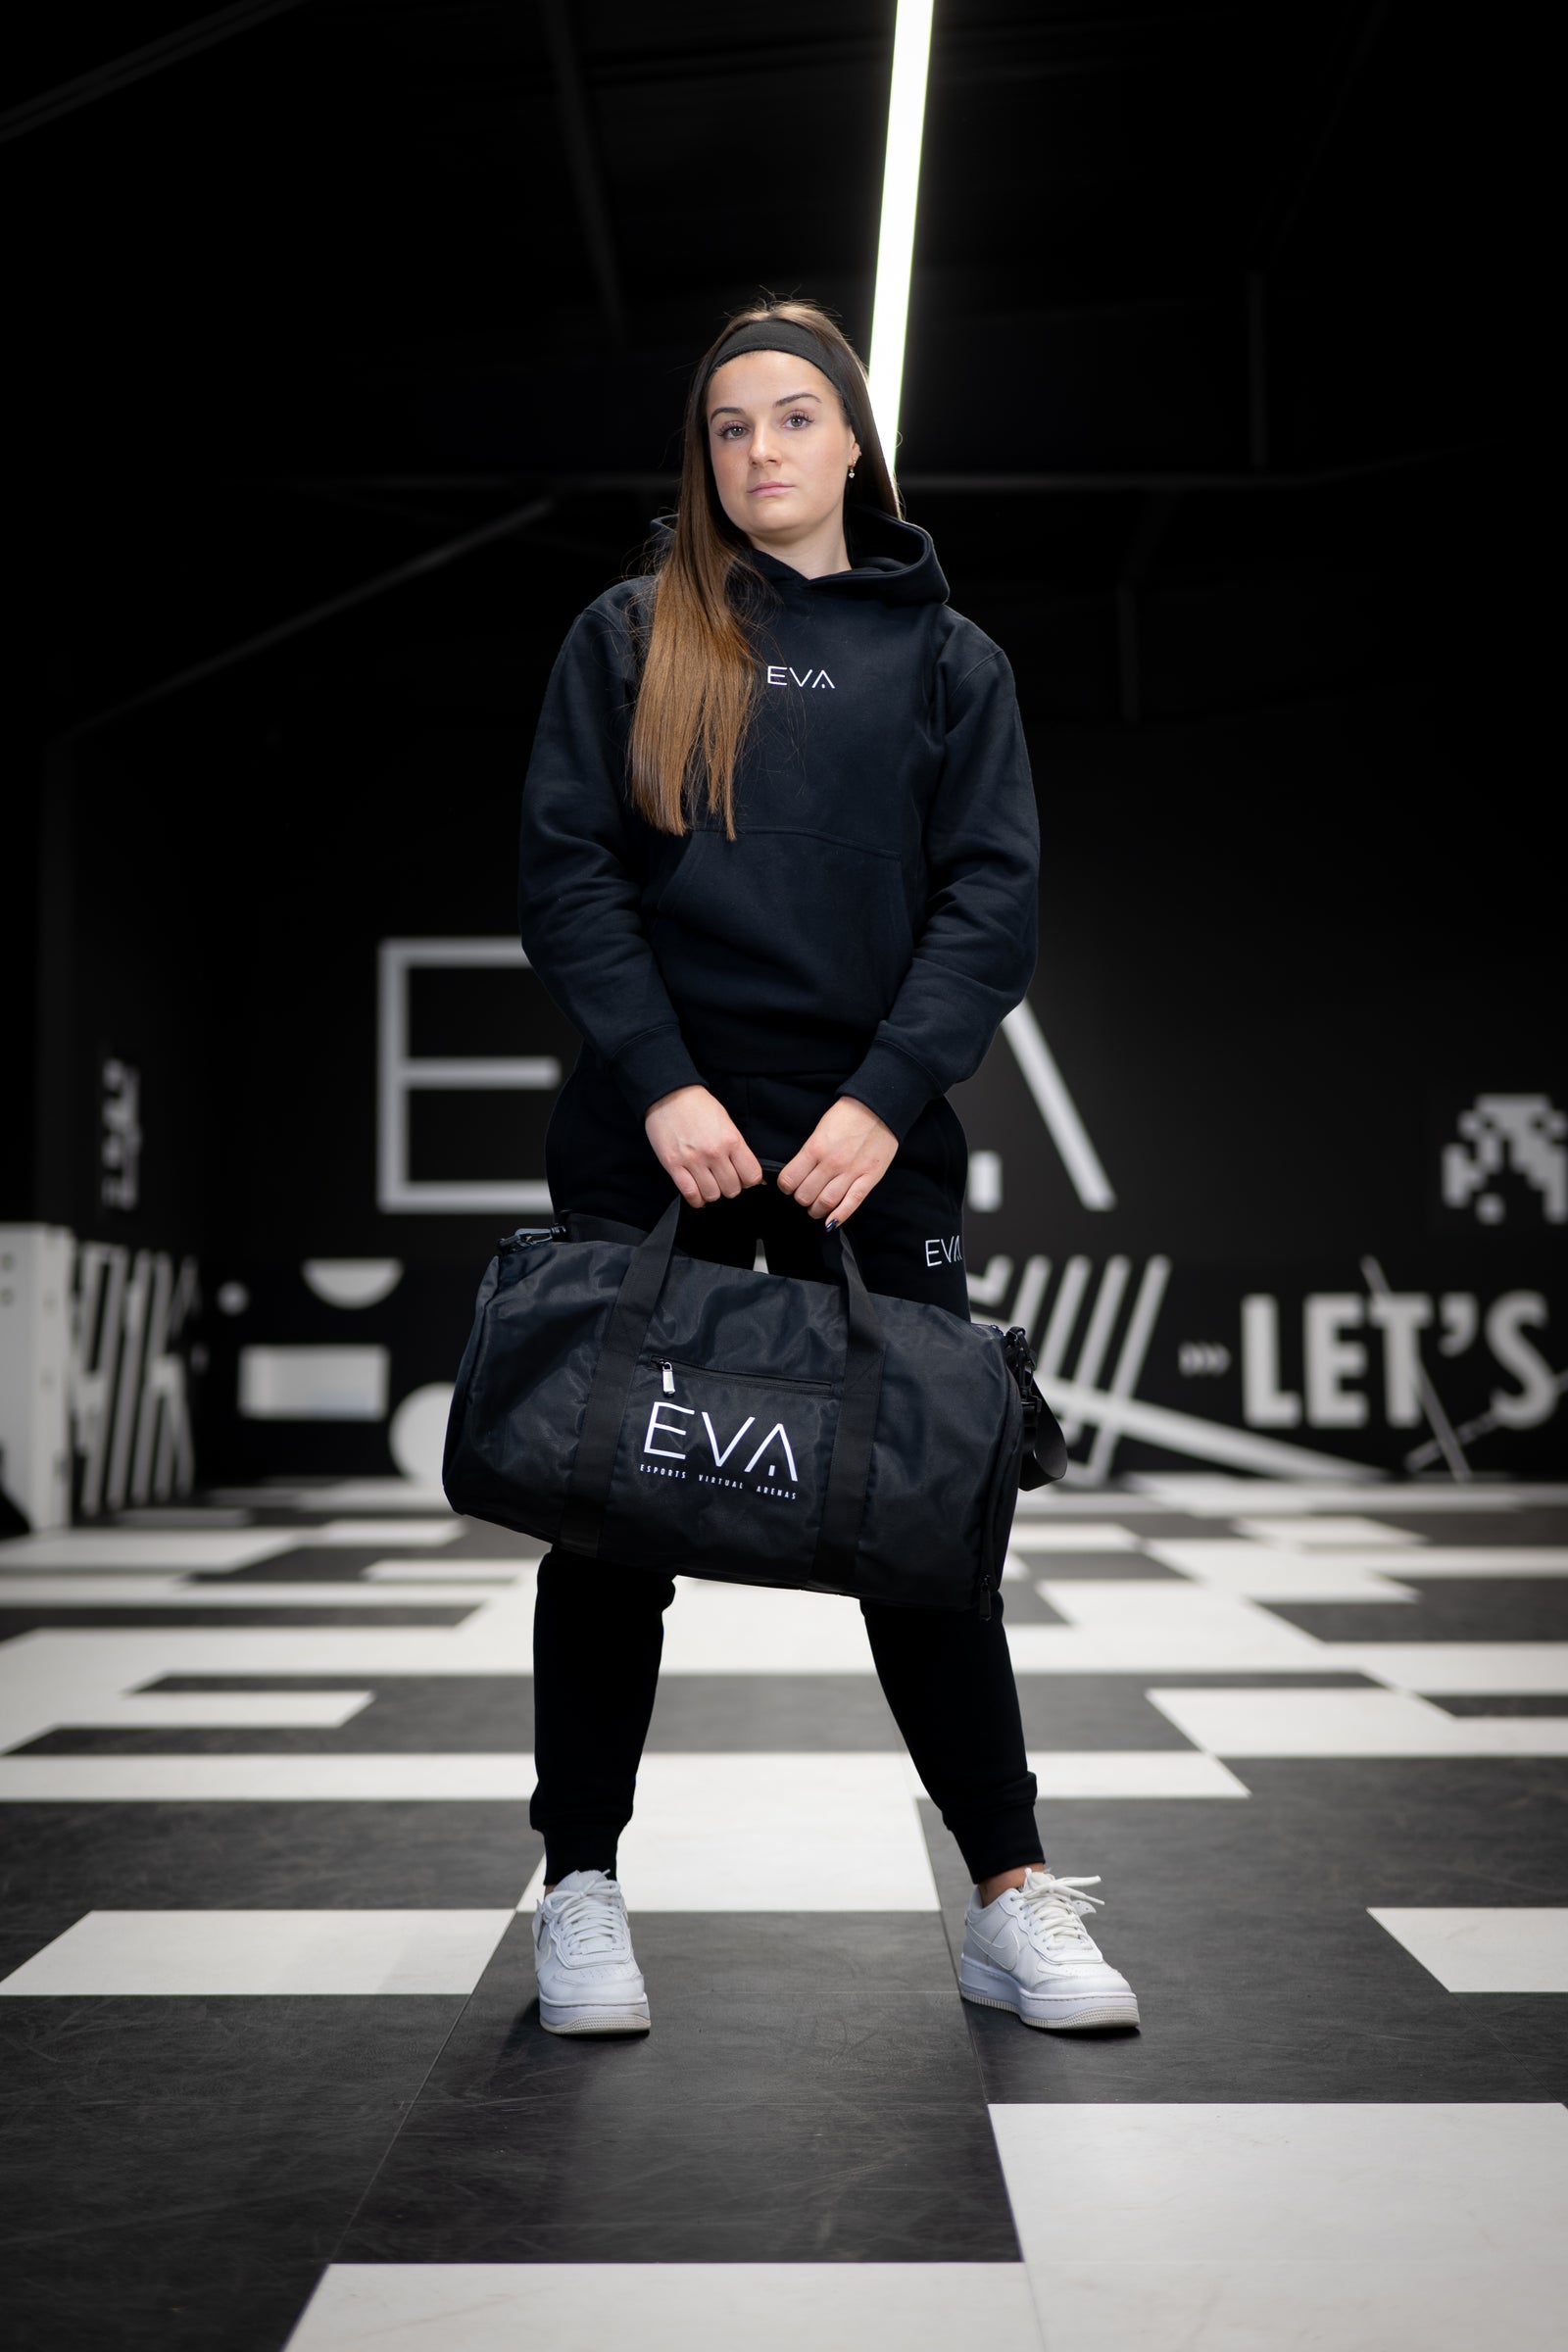 EVA sports bag